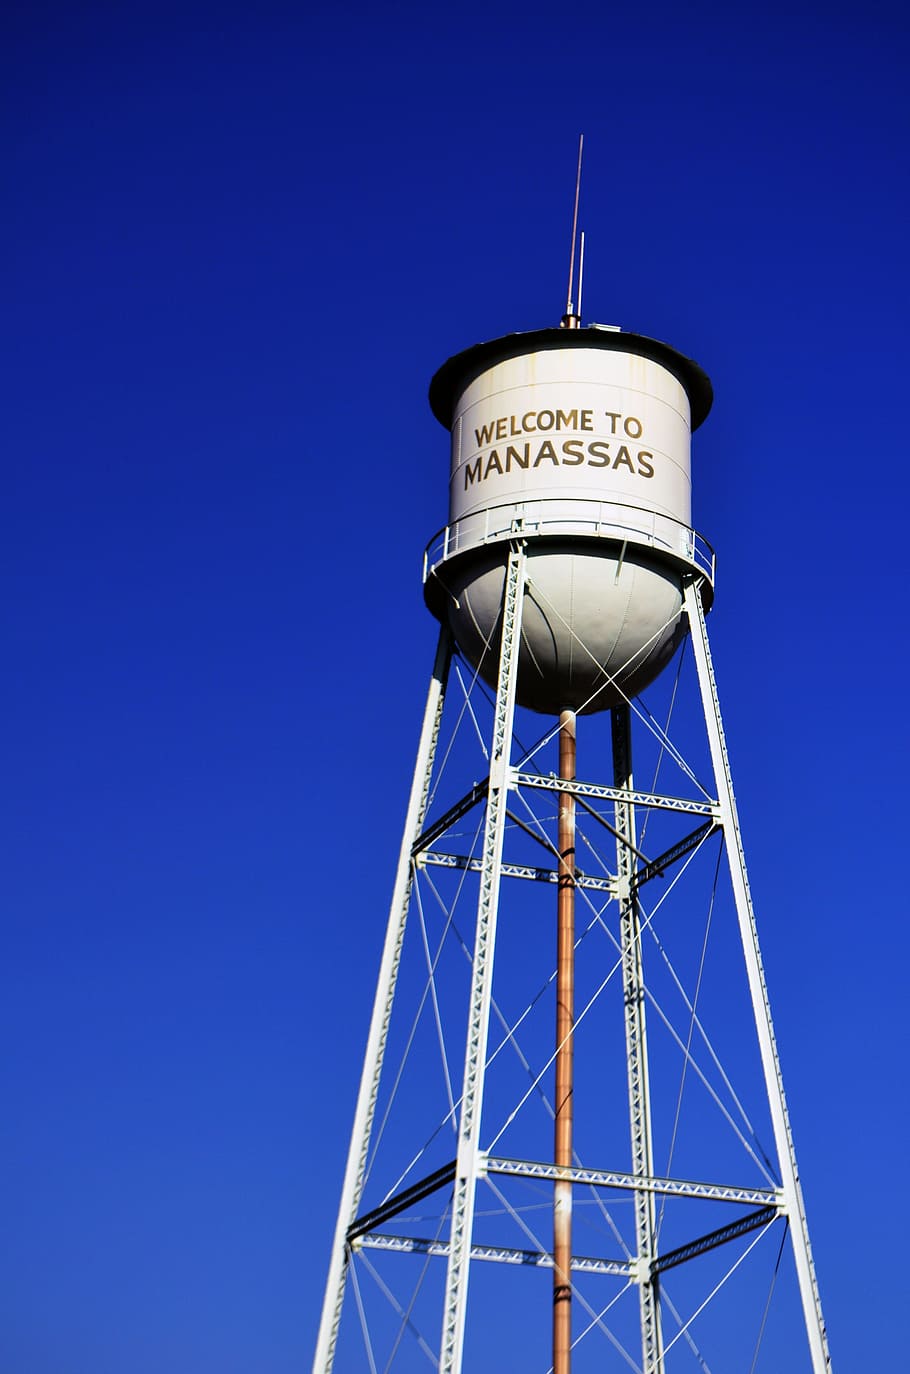 Water Tower, Manassas, Virginia, water, manassas, virginia, blue, vertical, water Tower - Storage Tank, tower, sky